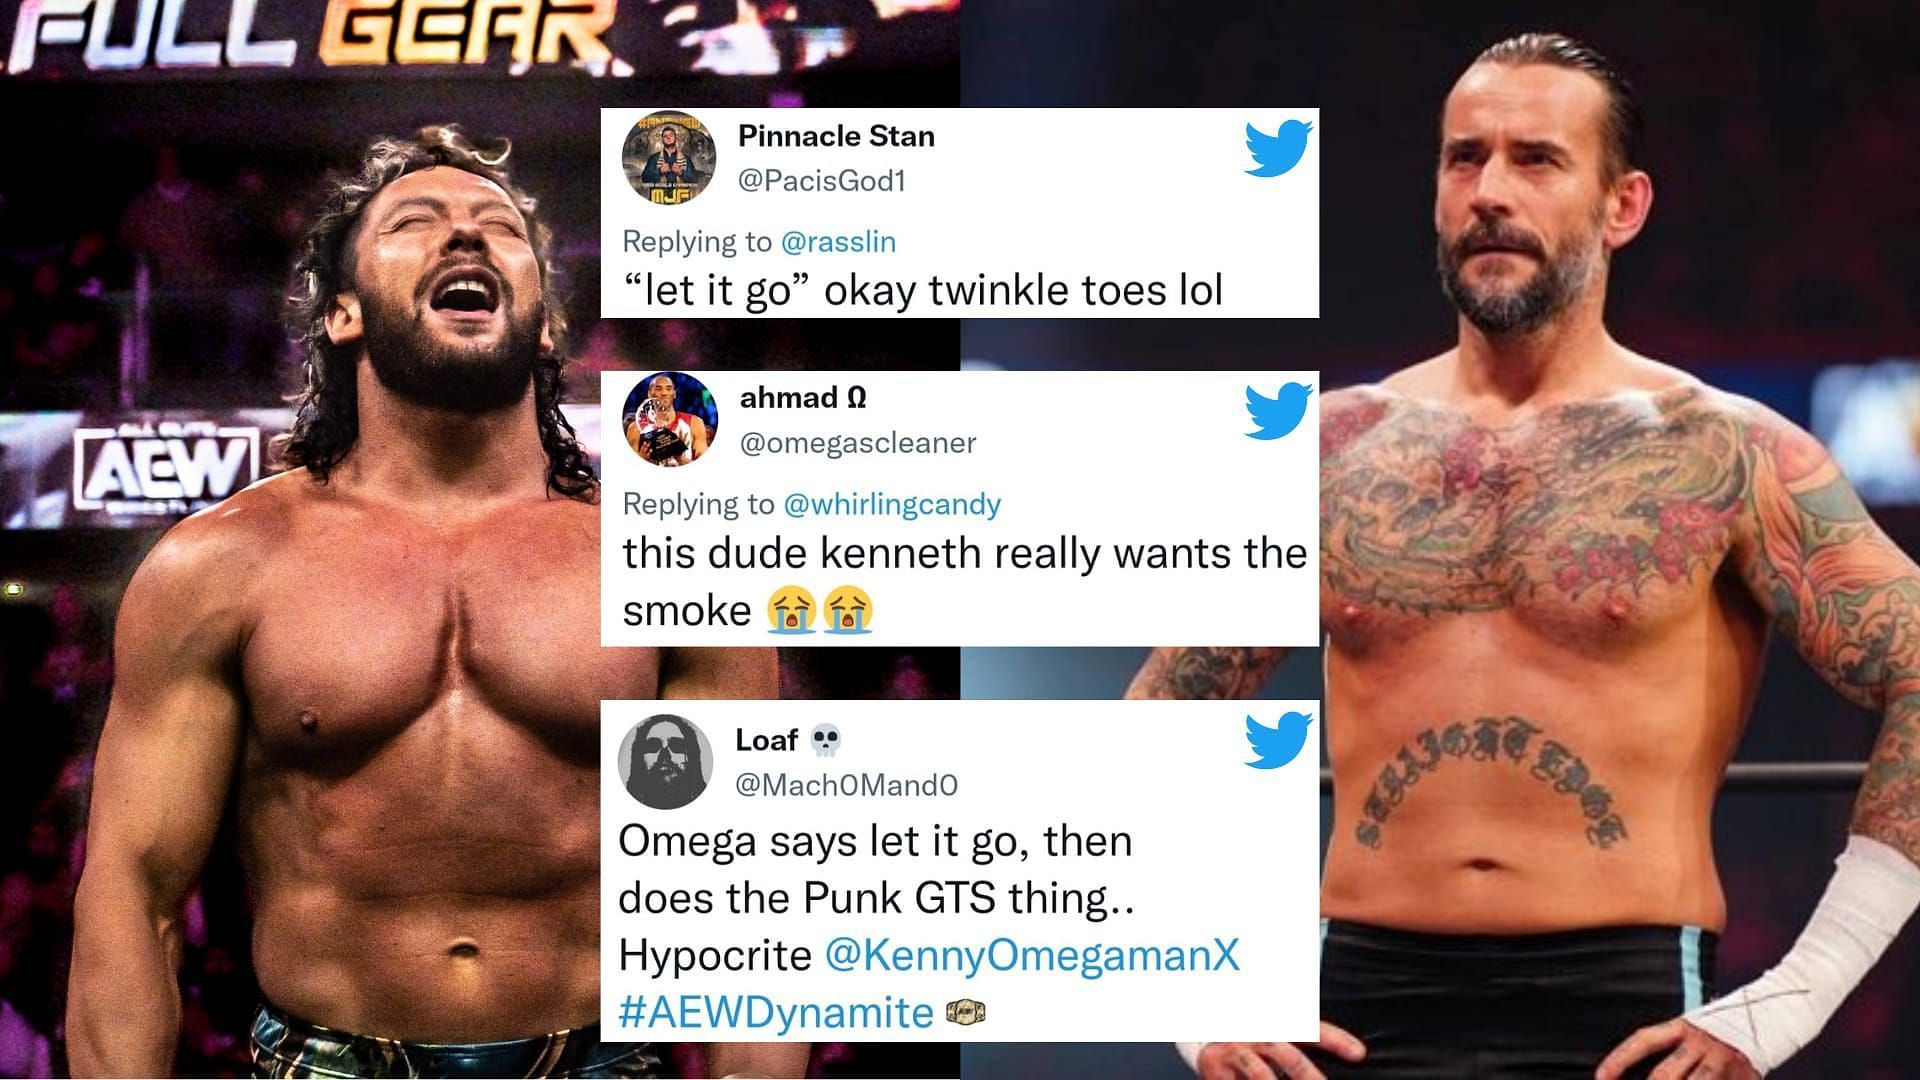 Kenny Omega mimicked CM Punk